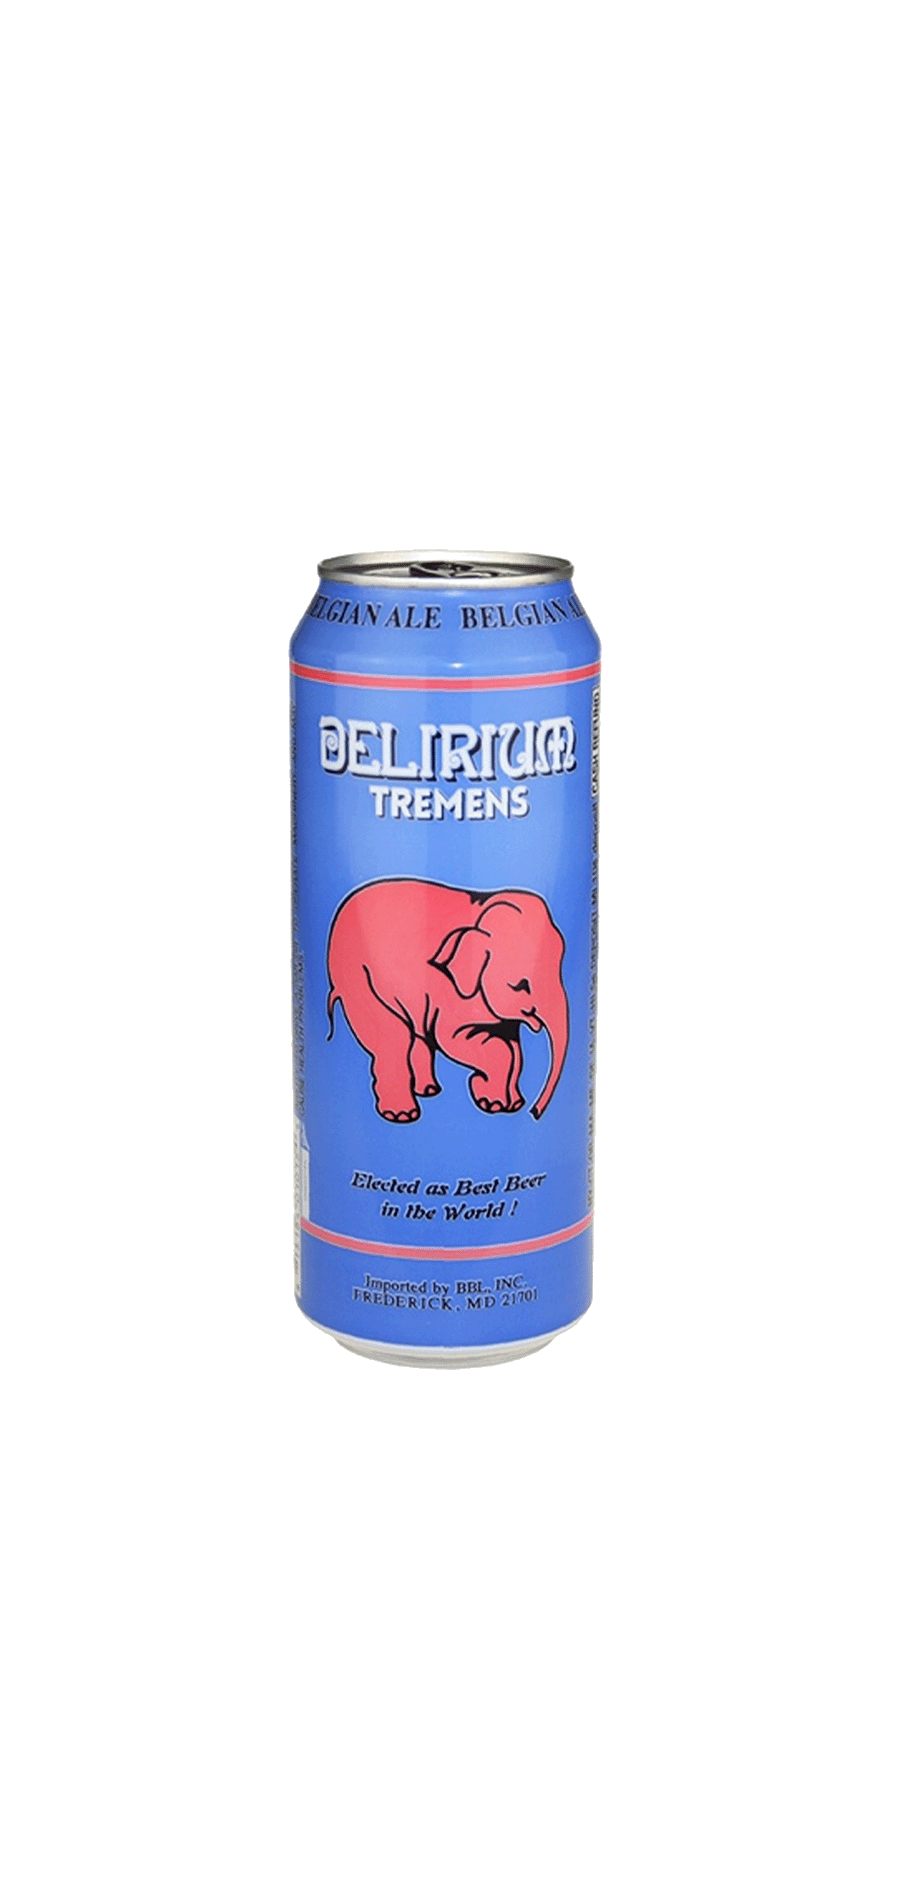 Delirium Tremens Belgium Strong Blond Ale